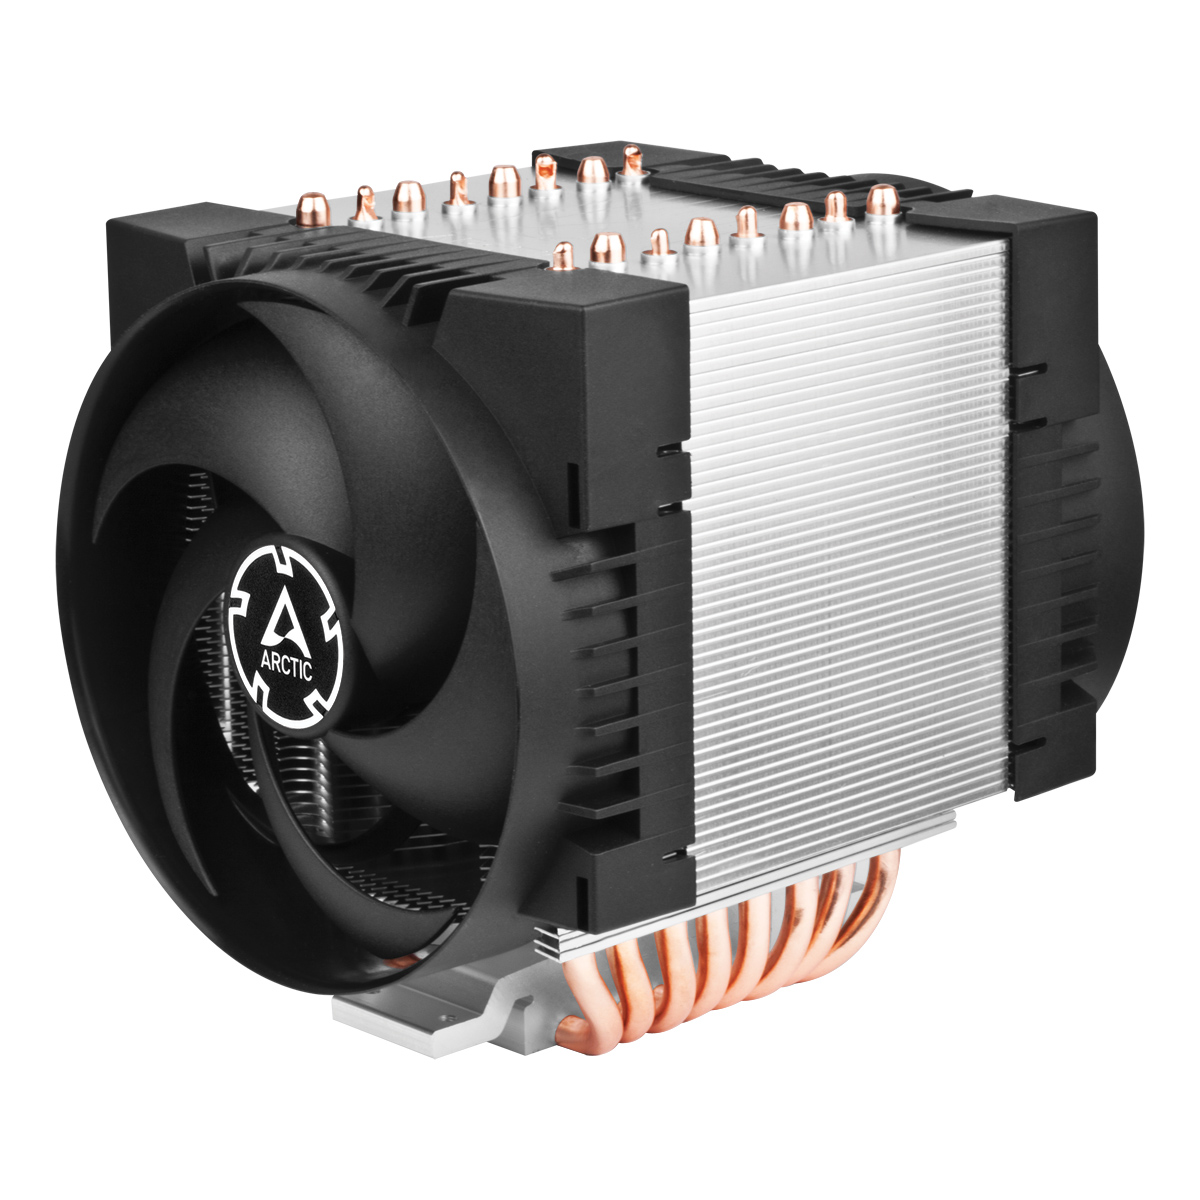 ARCTIC Freezer 4U-M - CPU Cooler pre AMD socket SP3, Intel 4189/ 4677, direct touch technology, compa